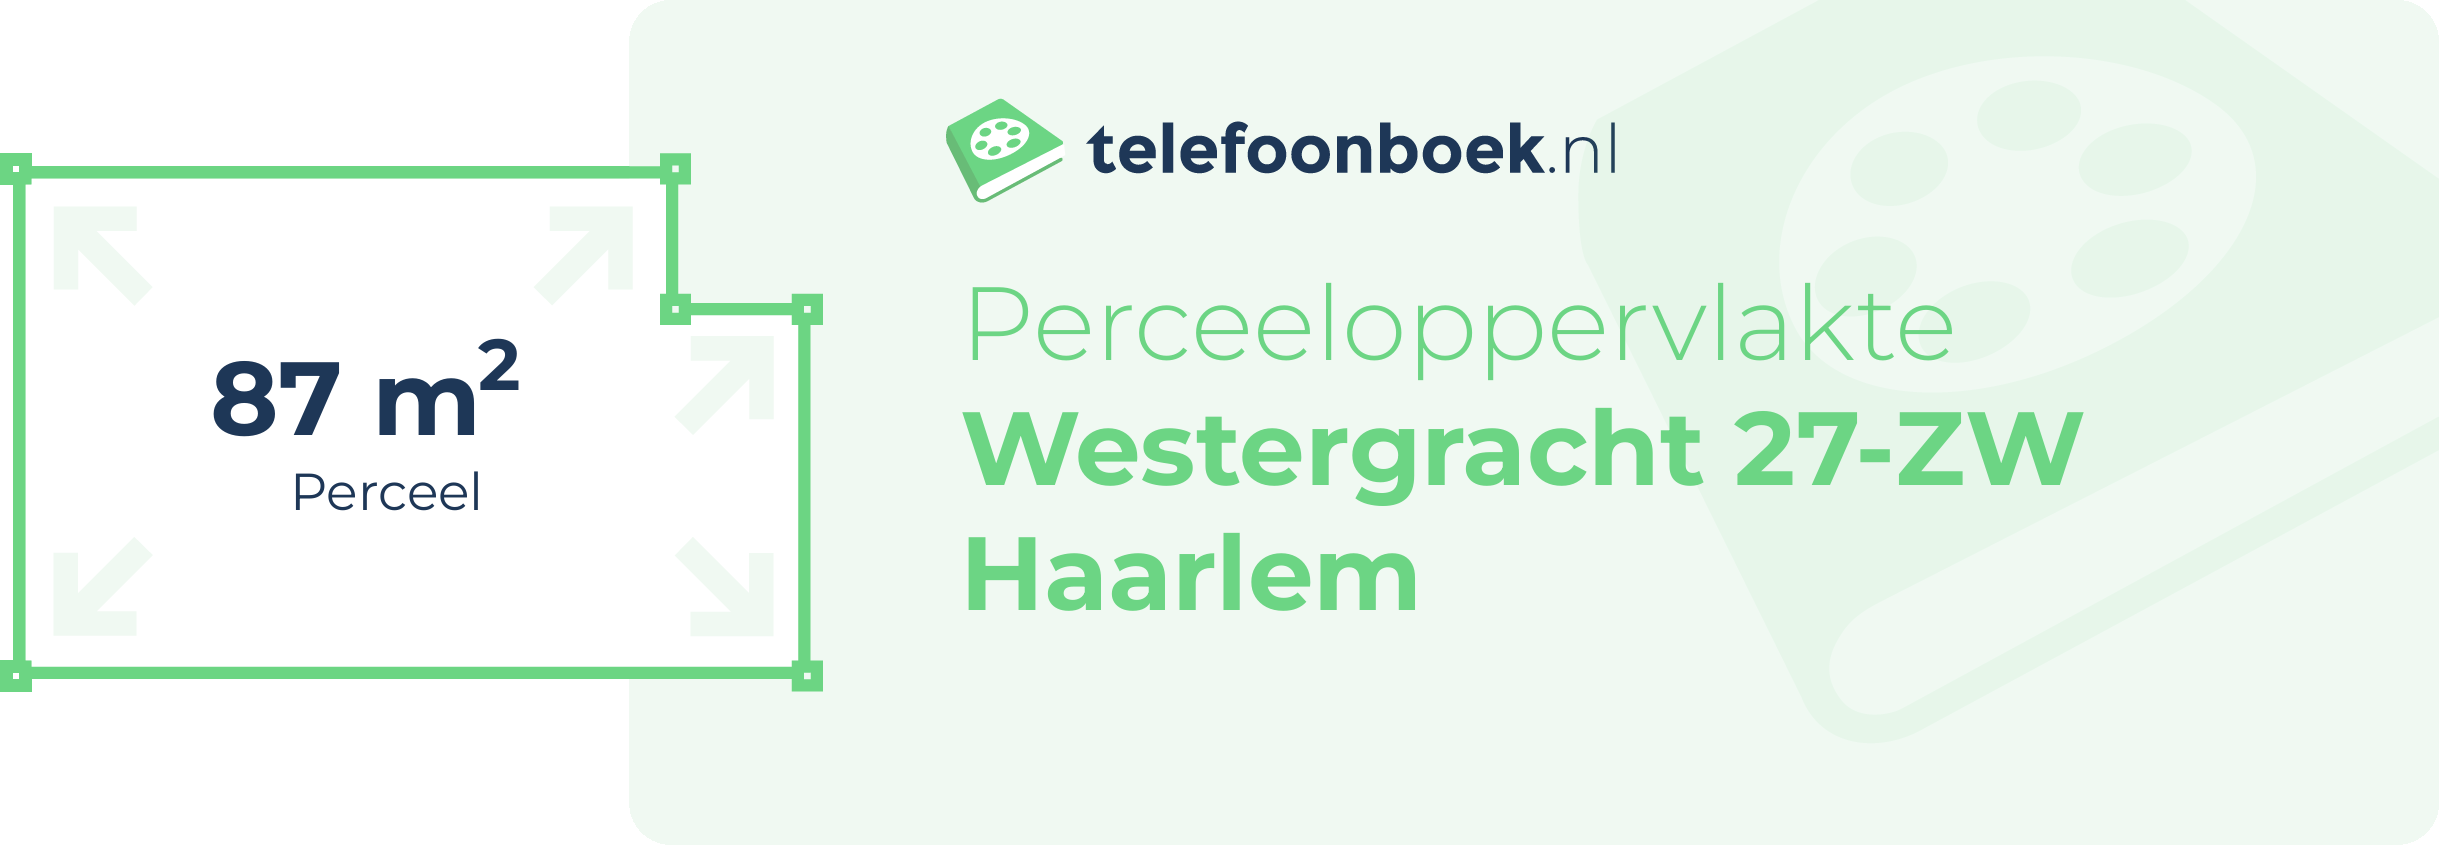 Perceeloppervlakte Westergracht 27-ZW Haarlem